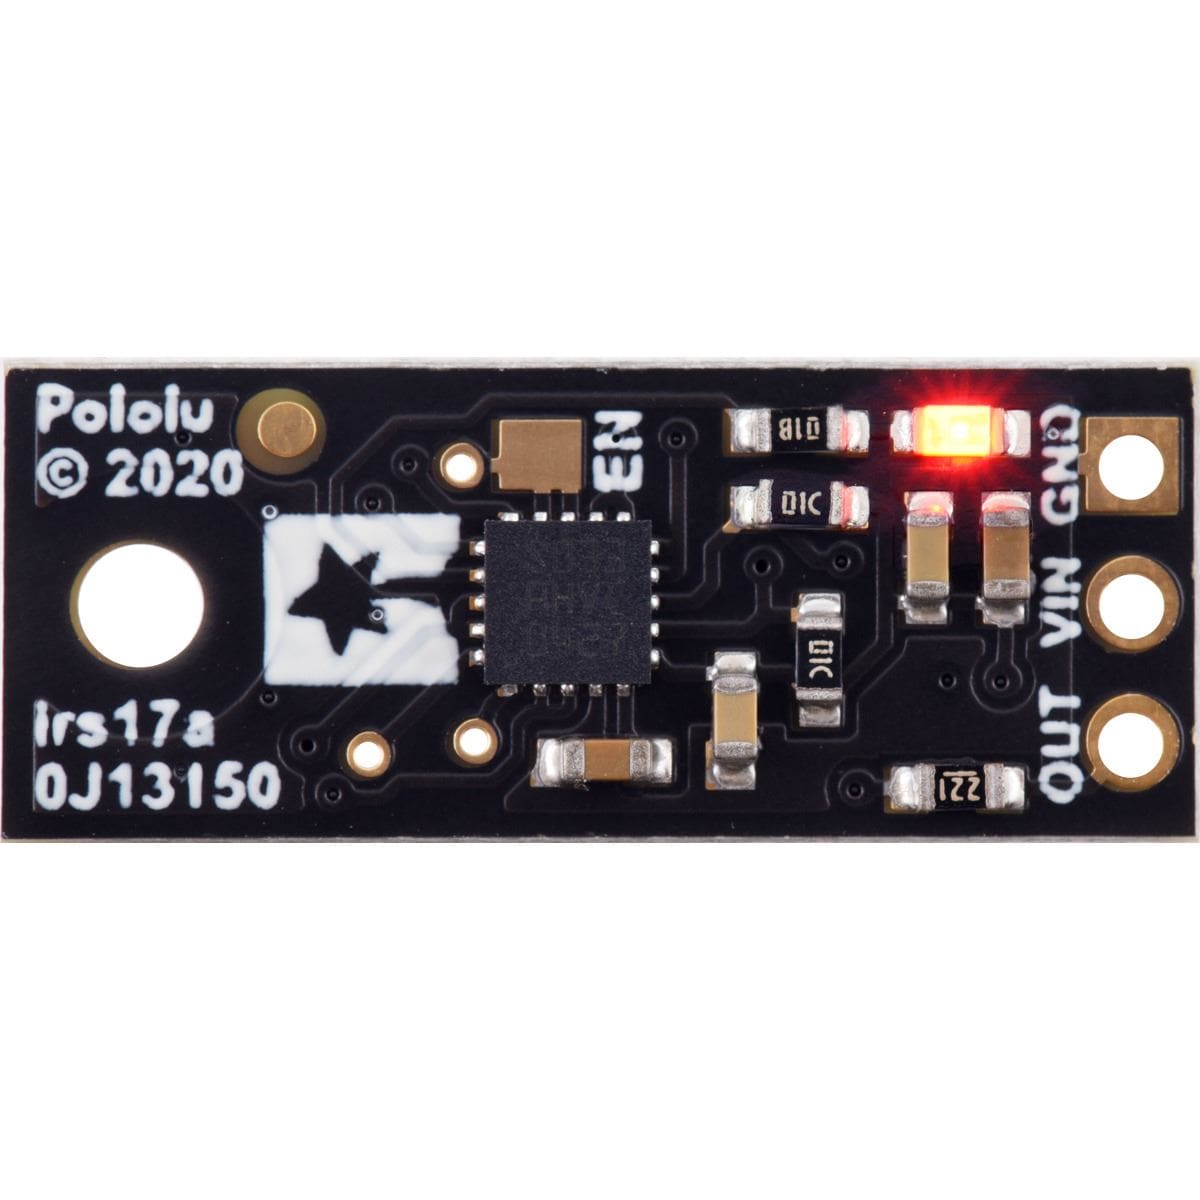 Pololu Distance Sensor with Pulse Width Output - 130cm - The Pi Hut